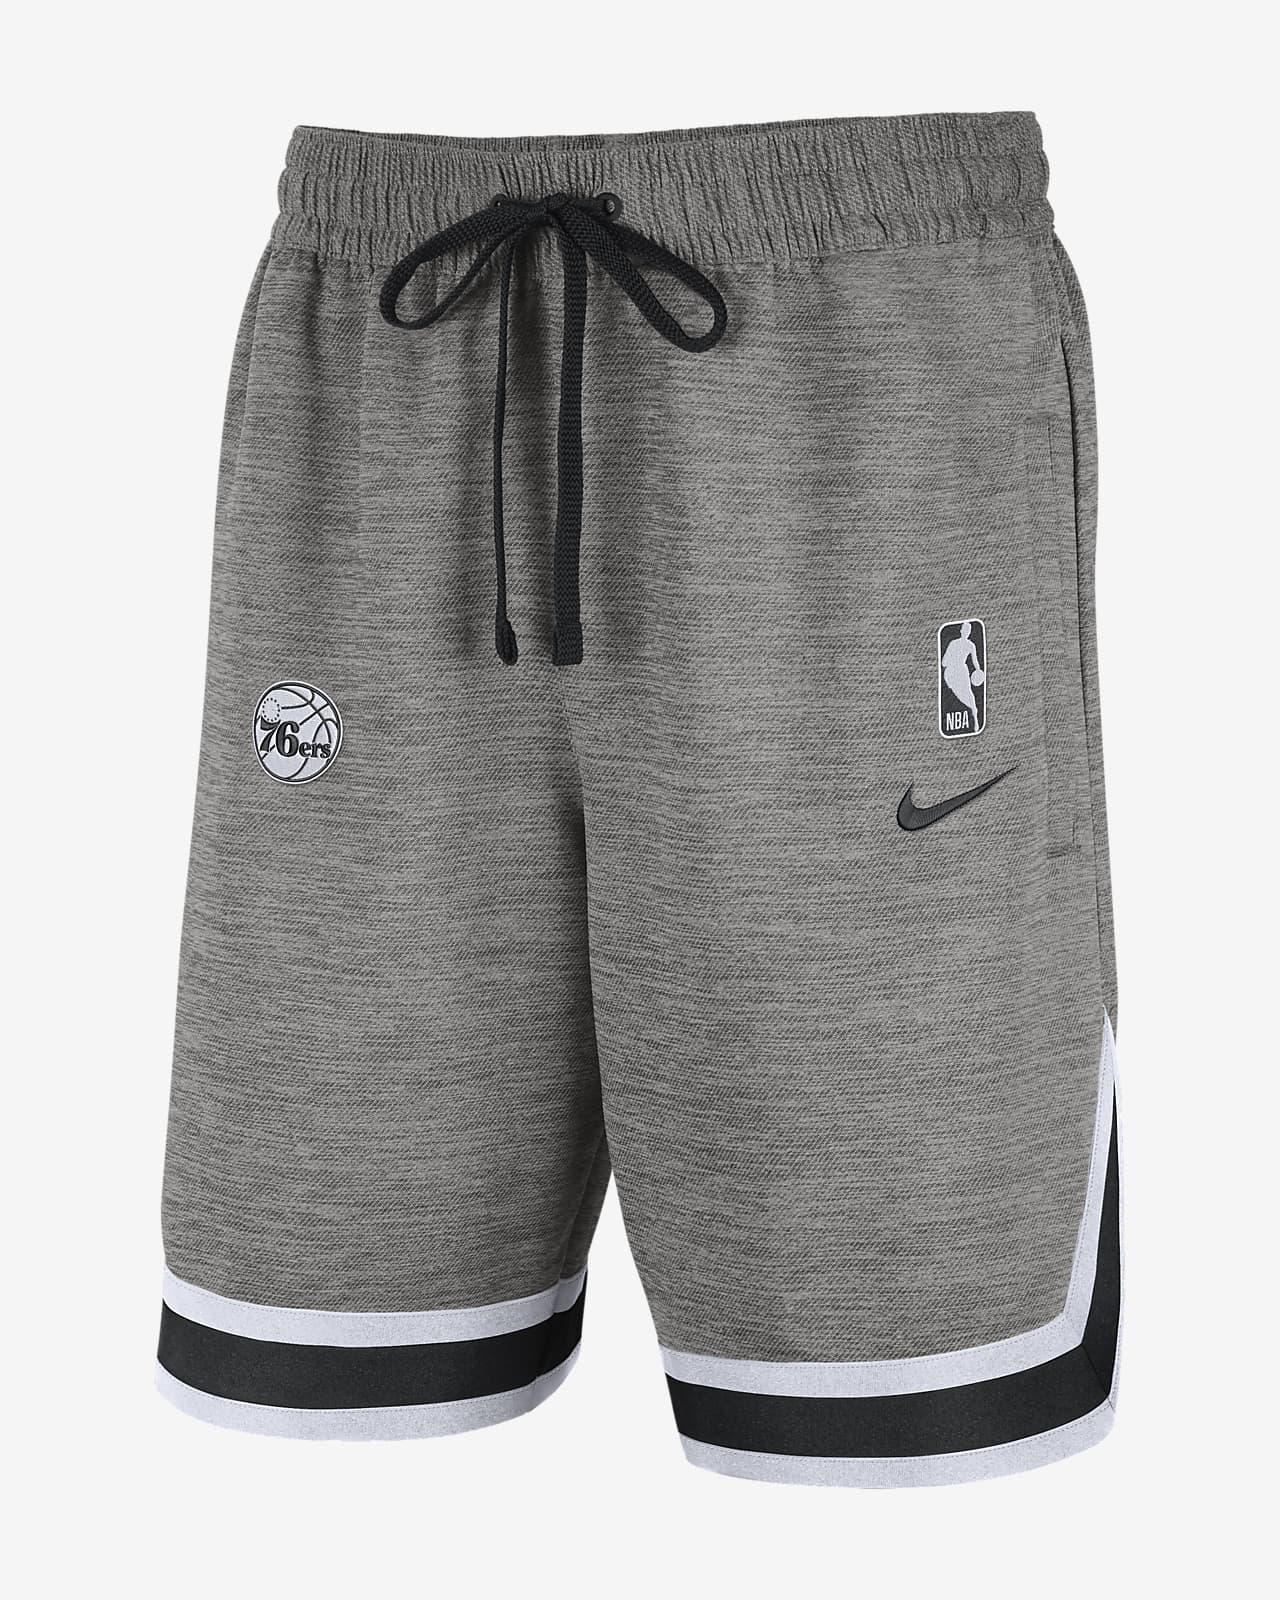 76ers Men's Nike Therma Flex NBA Shorts 